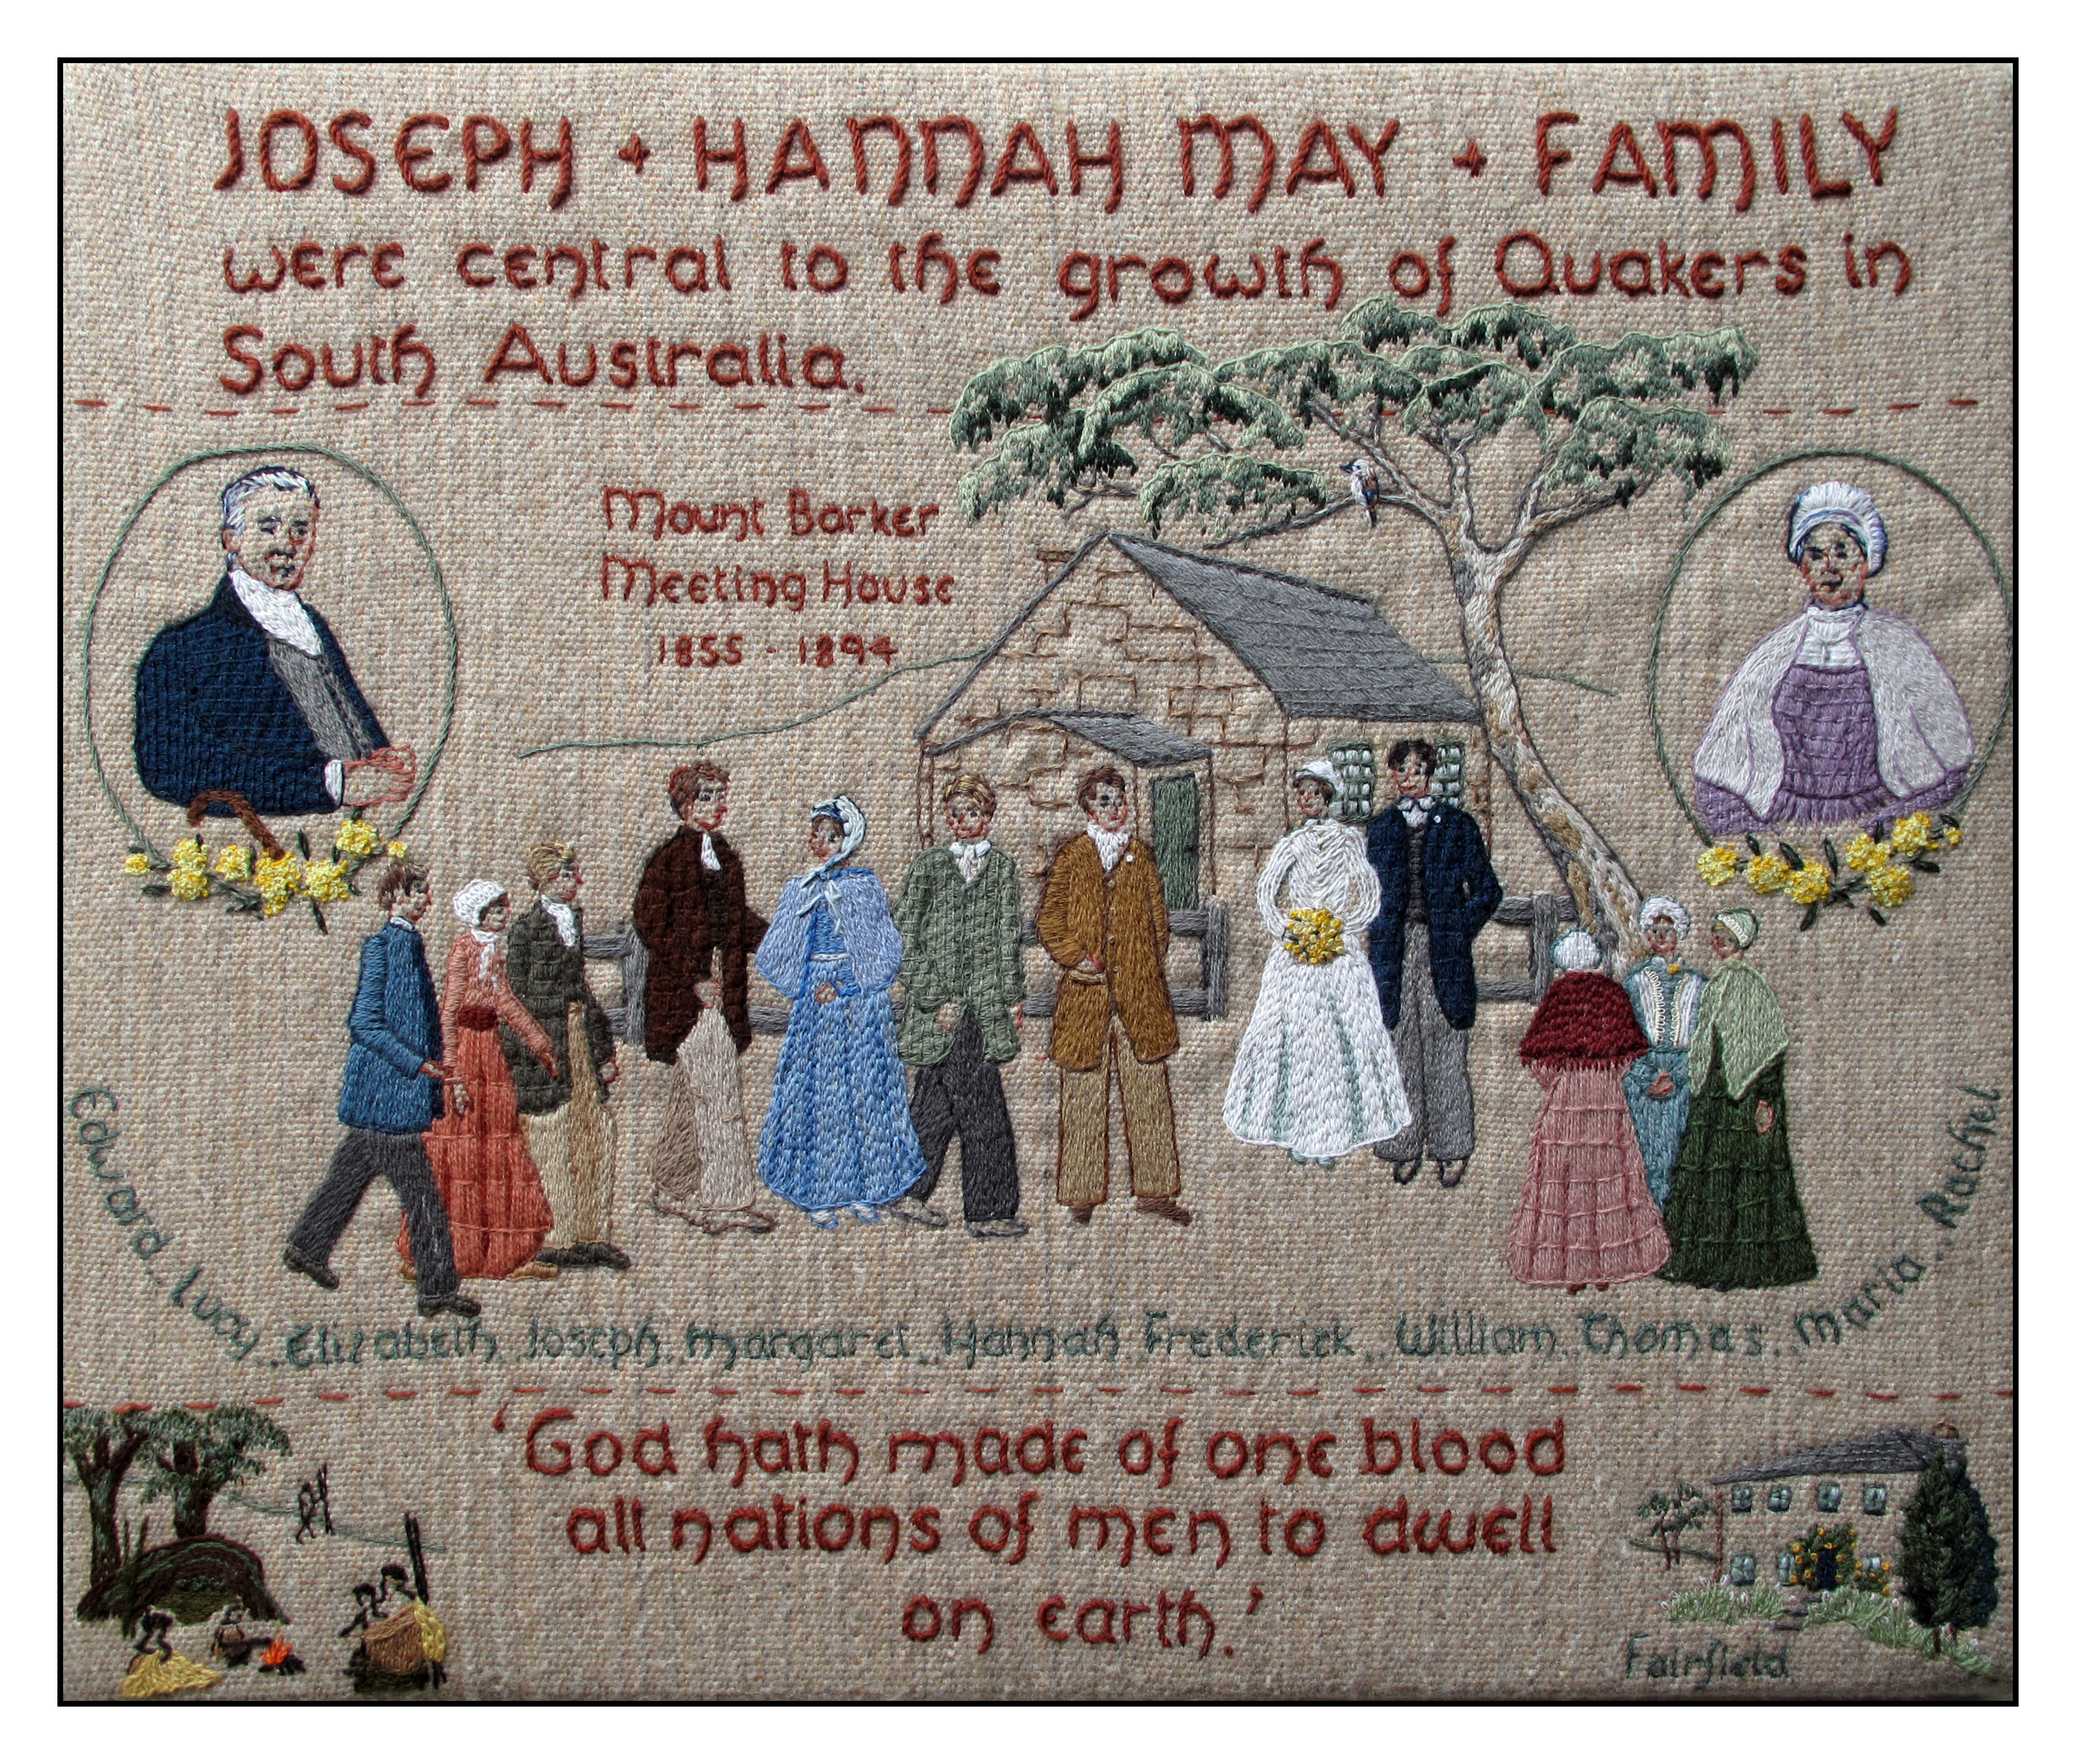 Joseph and Hannah May family